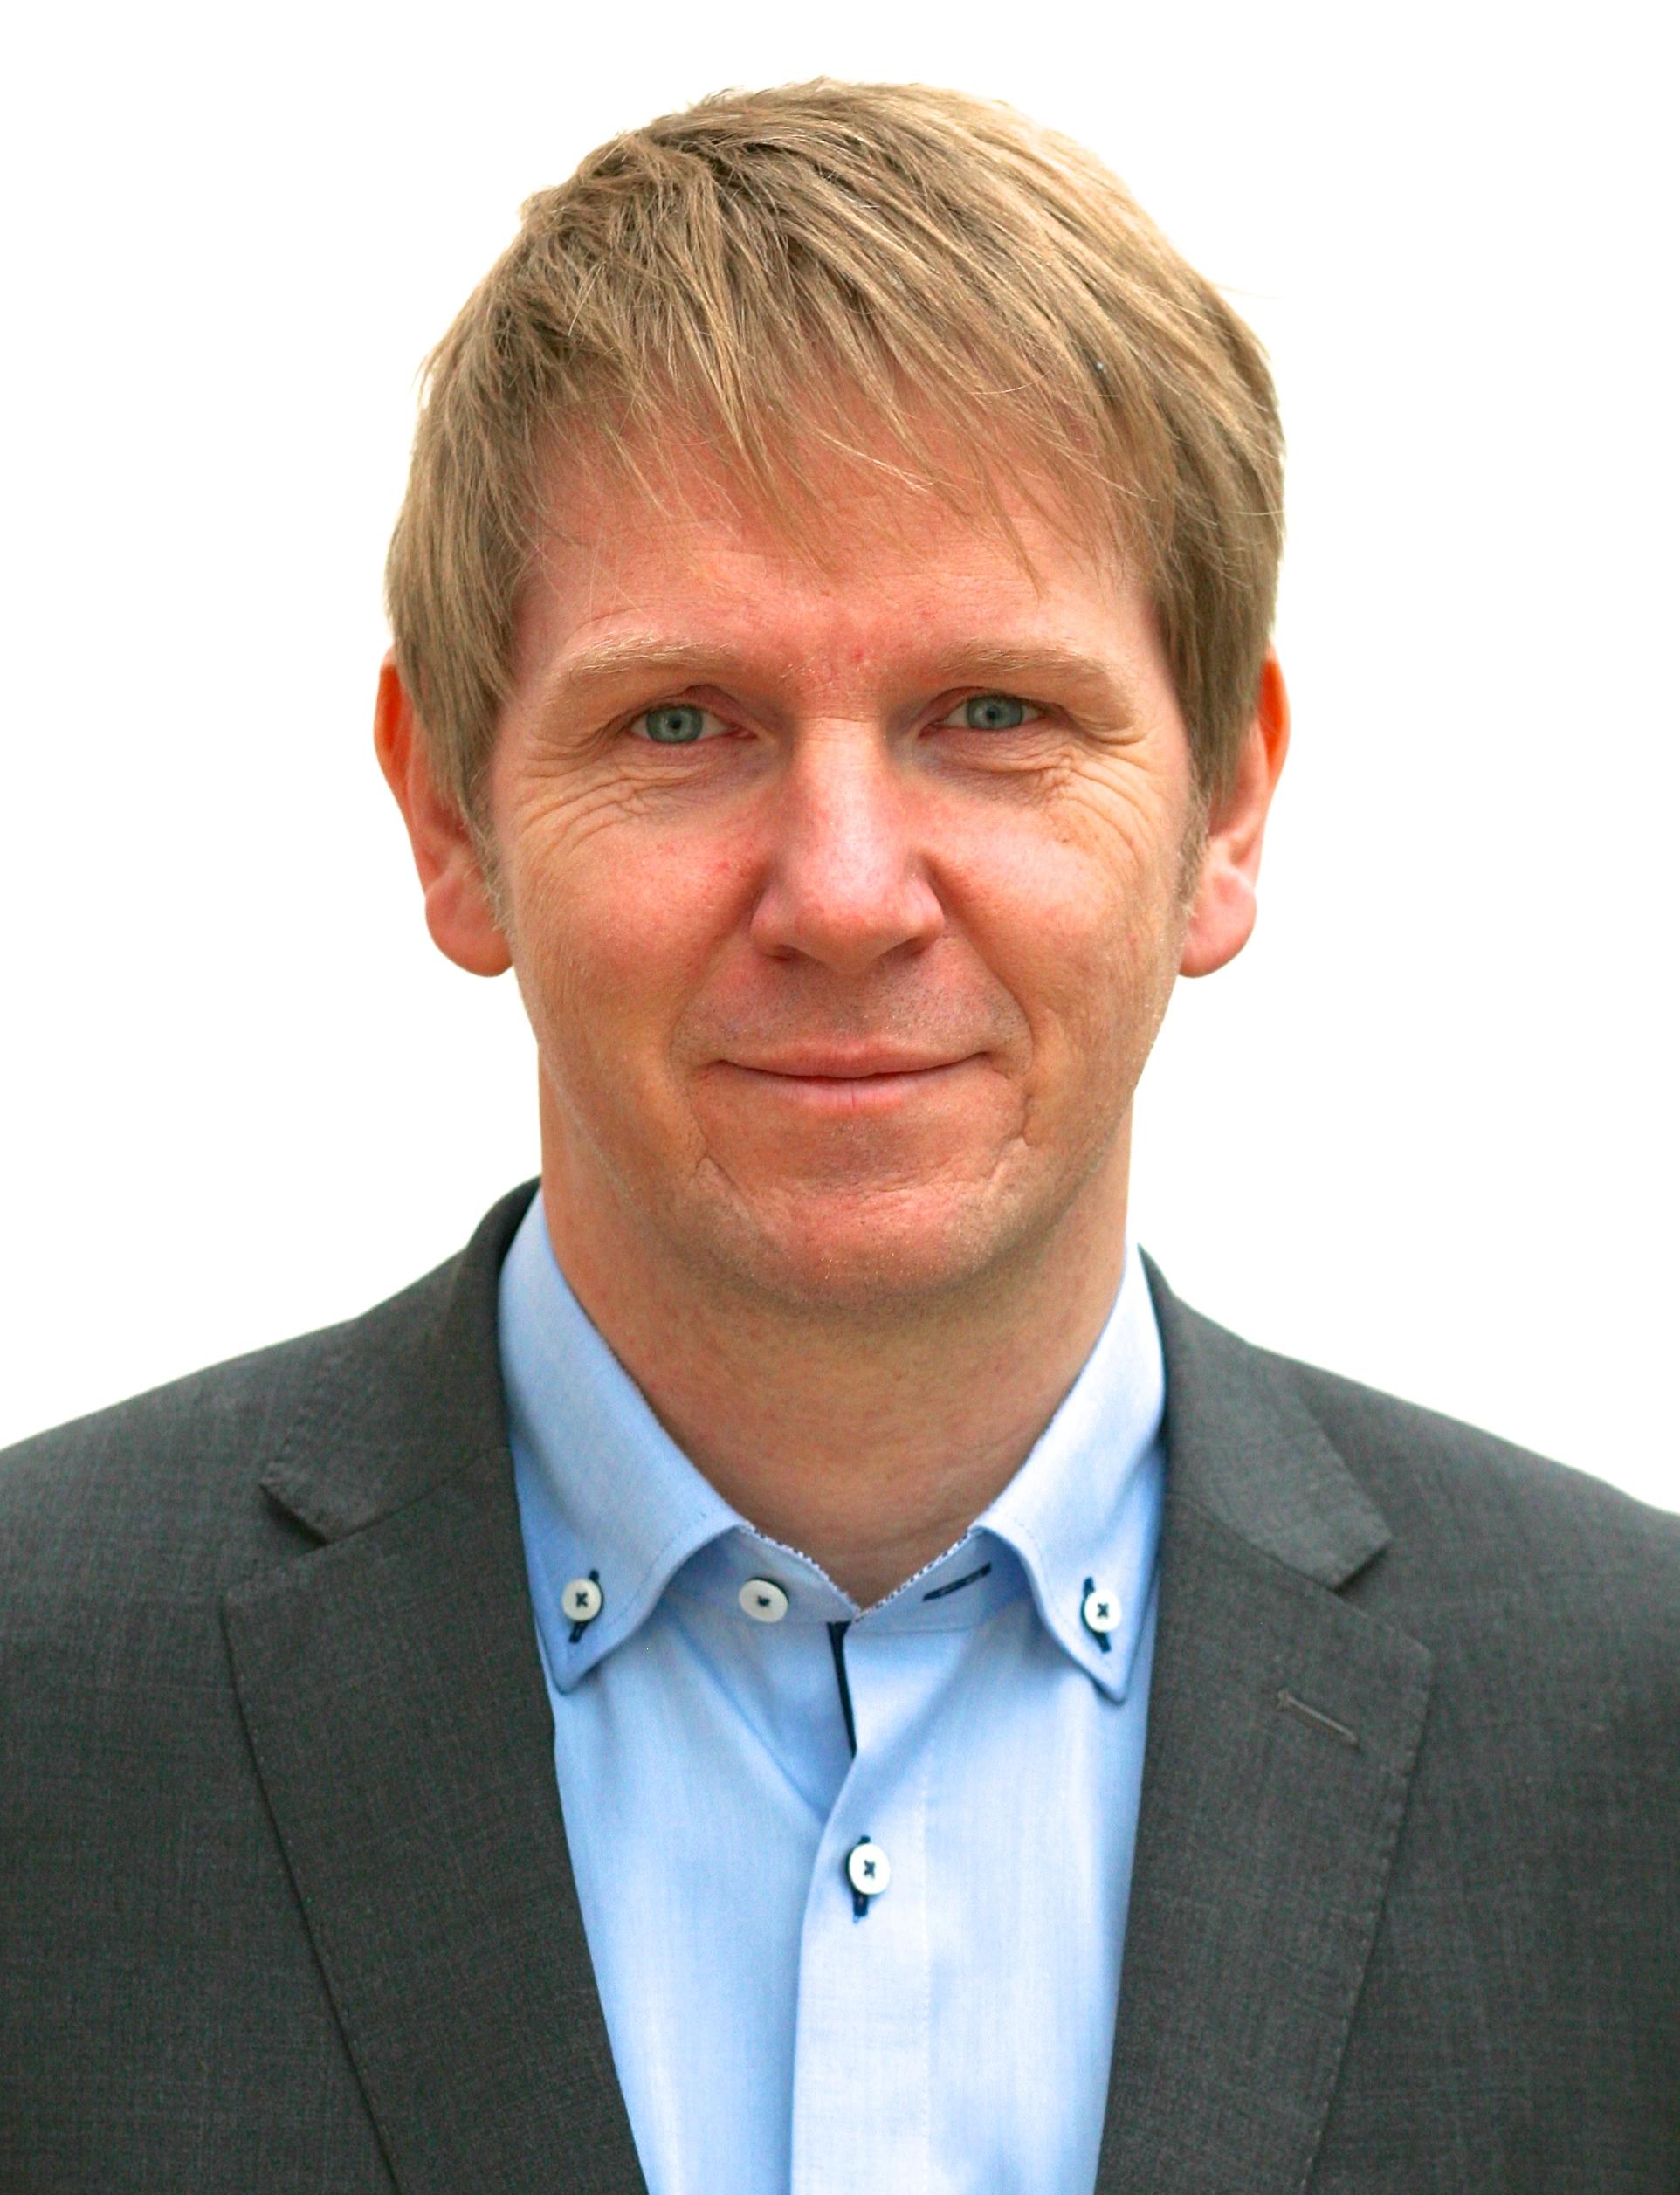 David Aitken - Managing Director at Greenworld